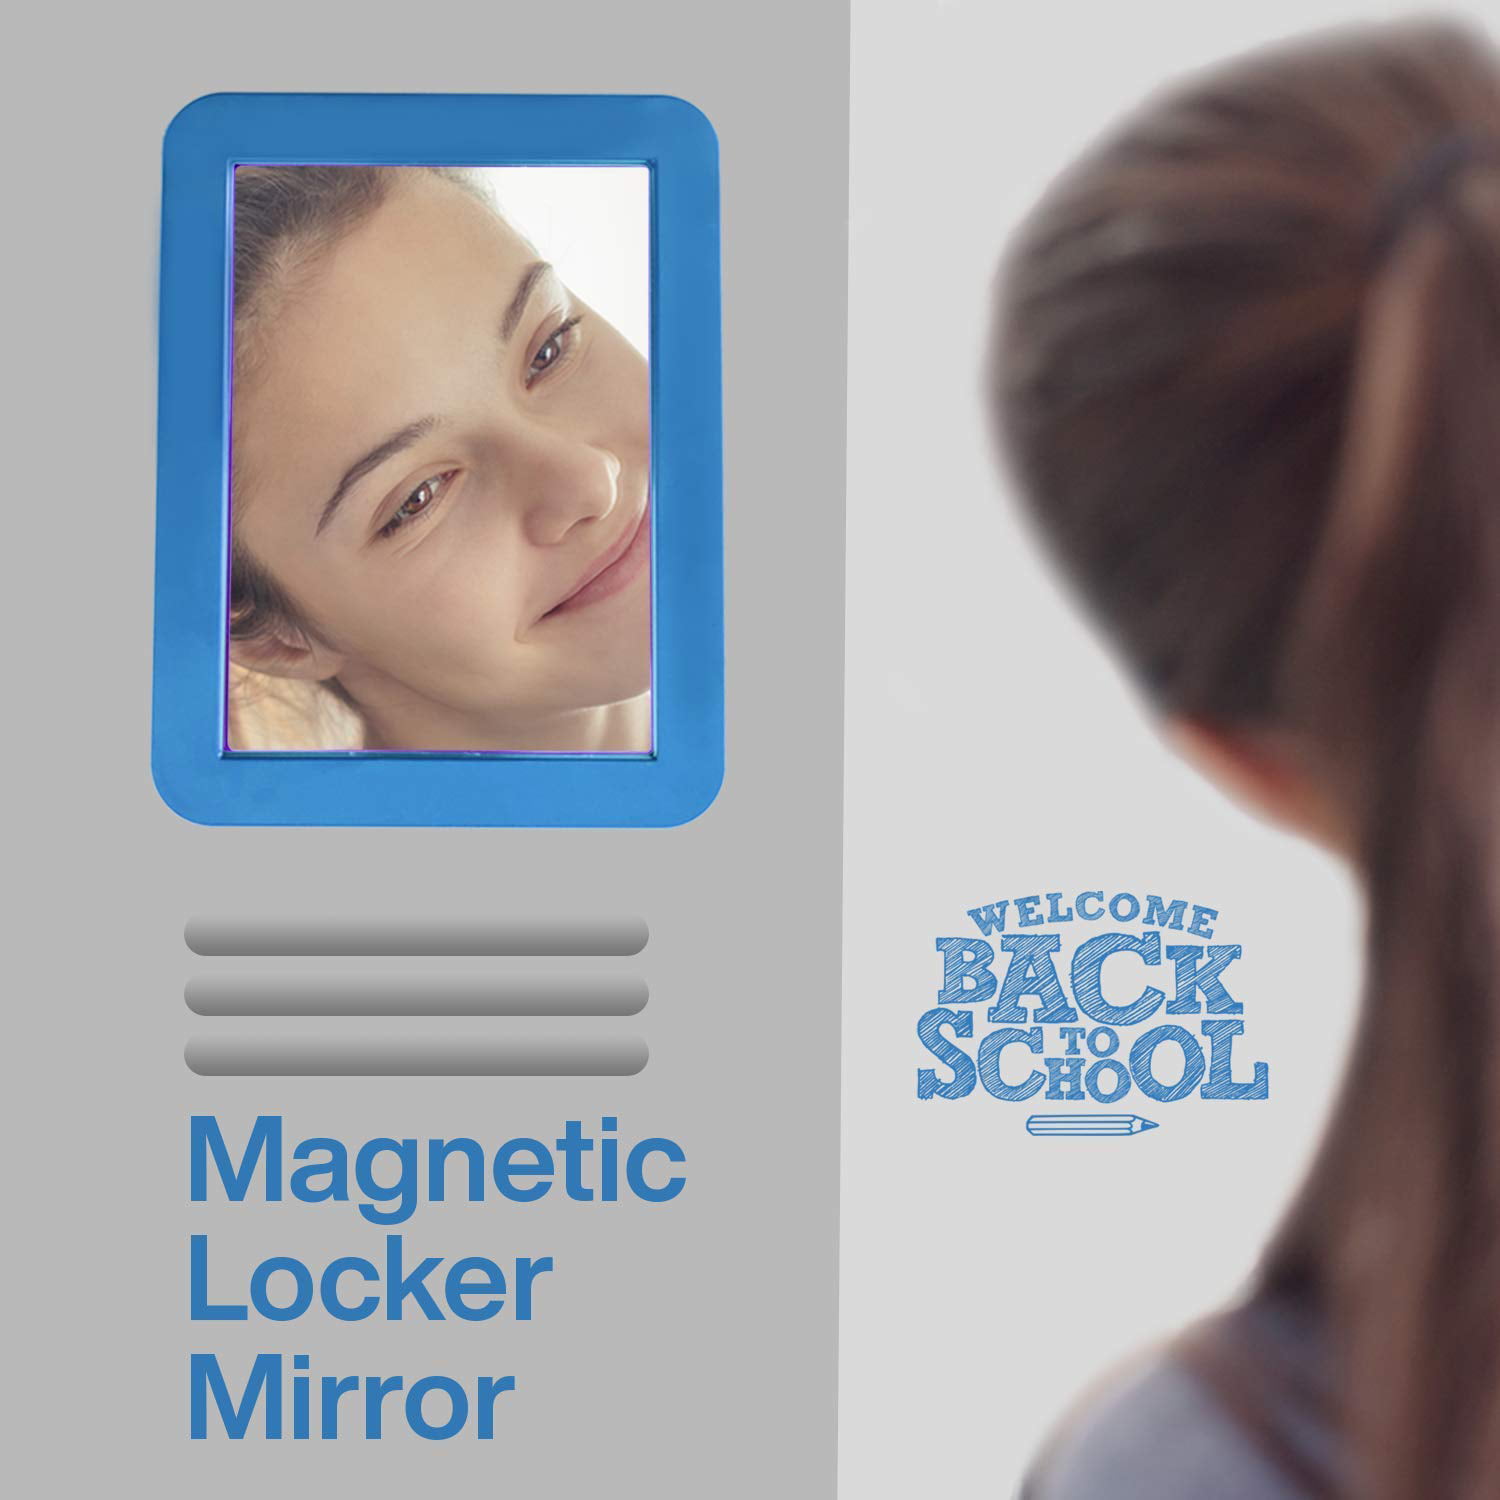 School locker mirrors - Search Shopping